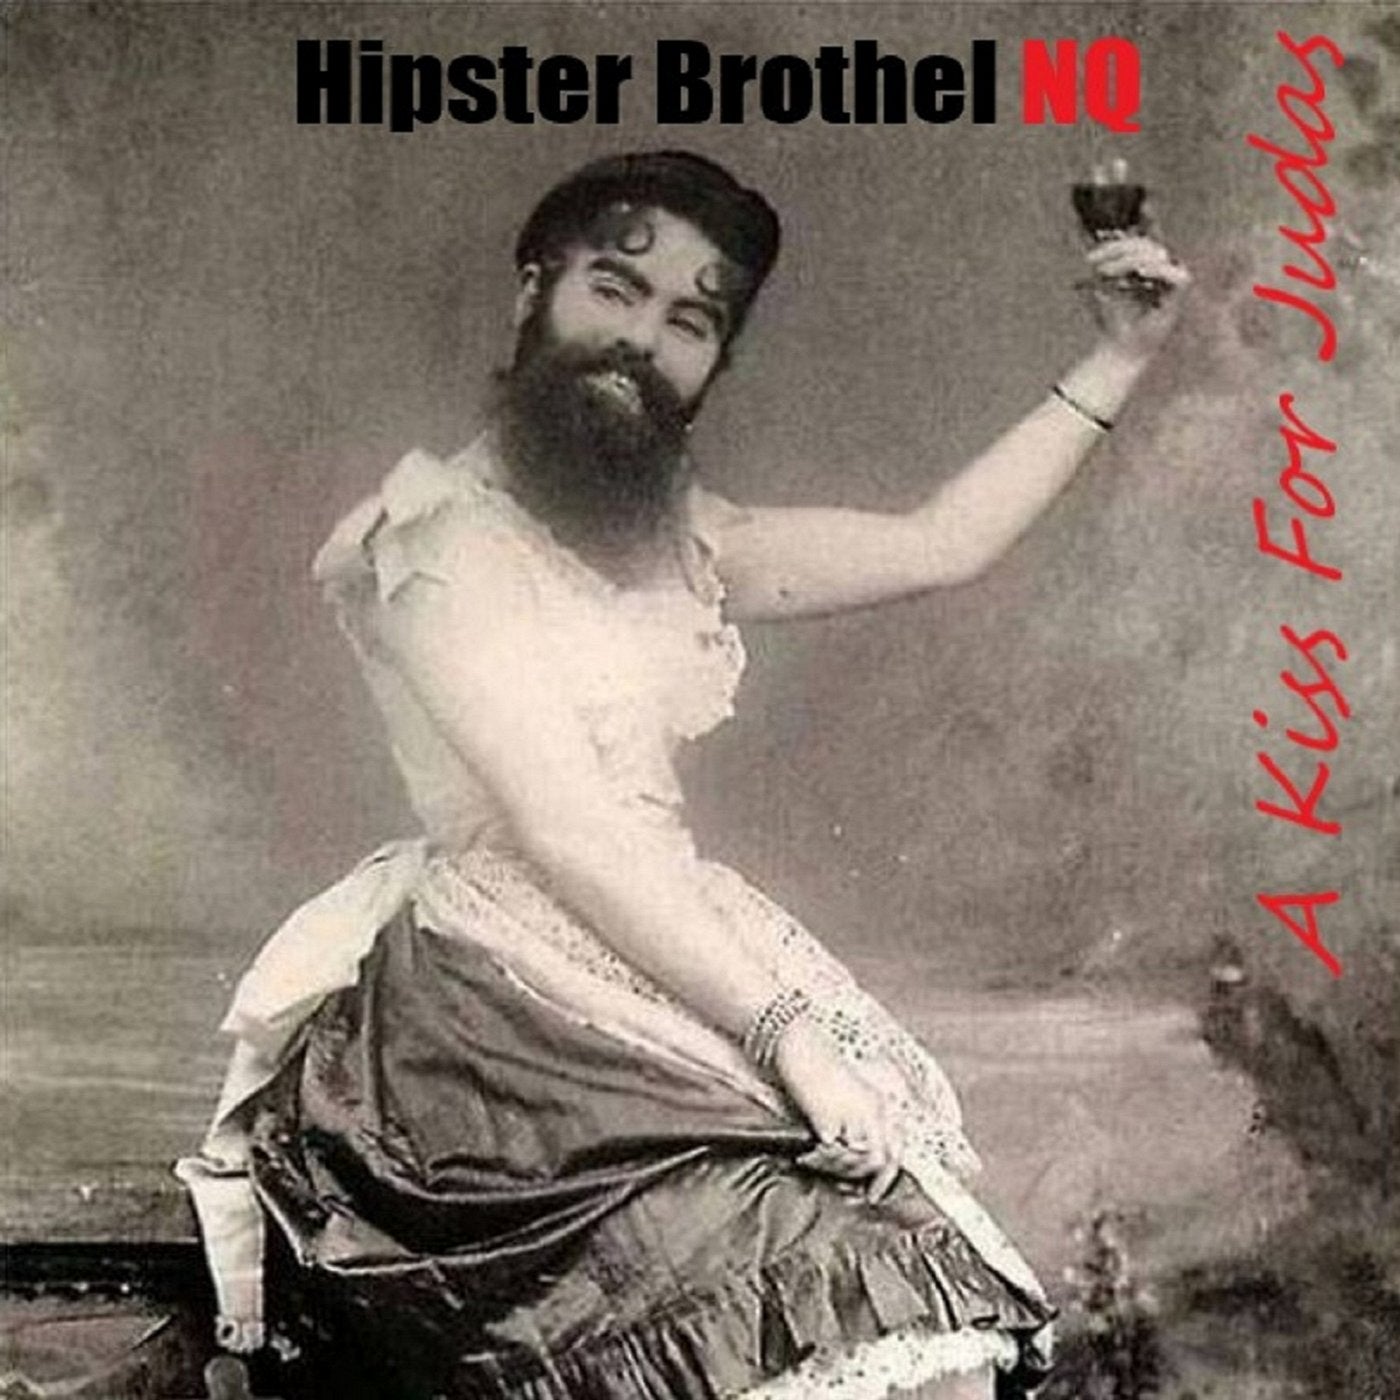 Hipster Brothel NQ - A Kiss For Judas